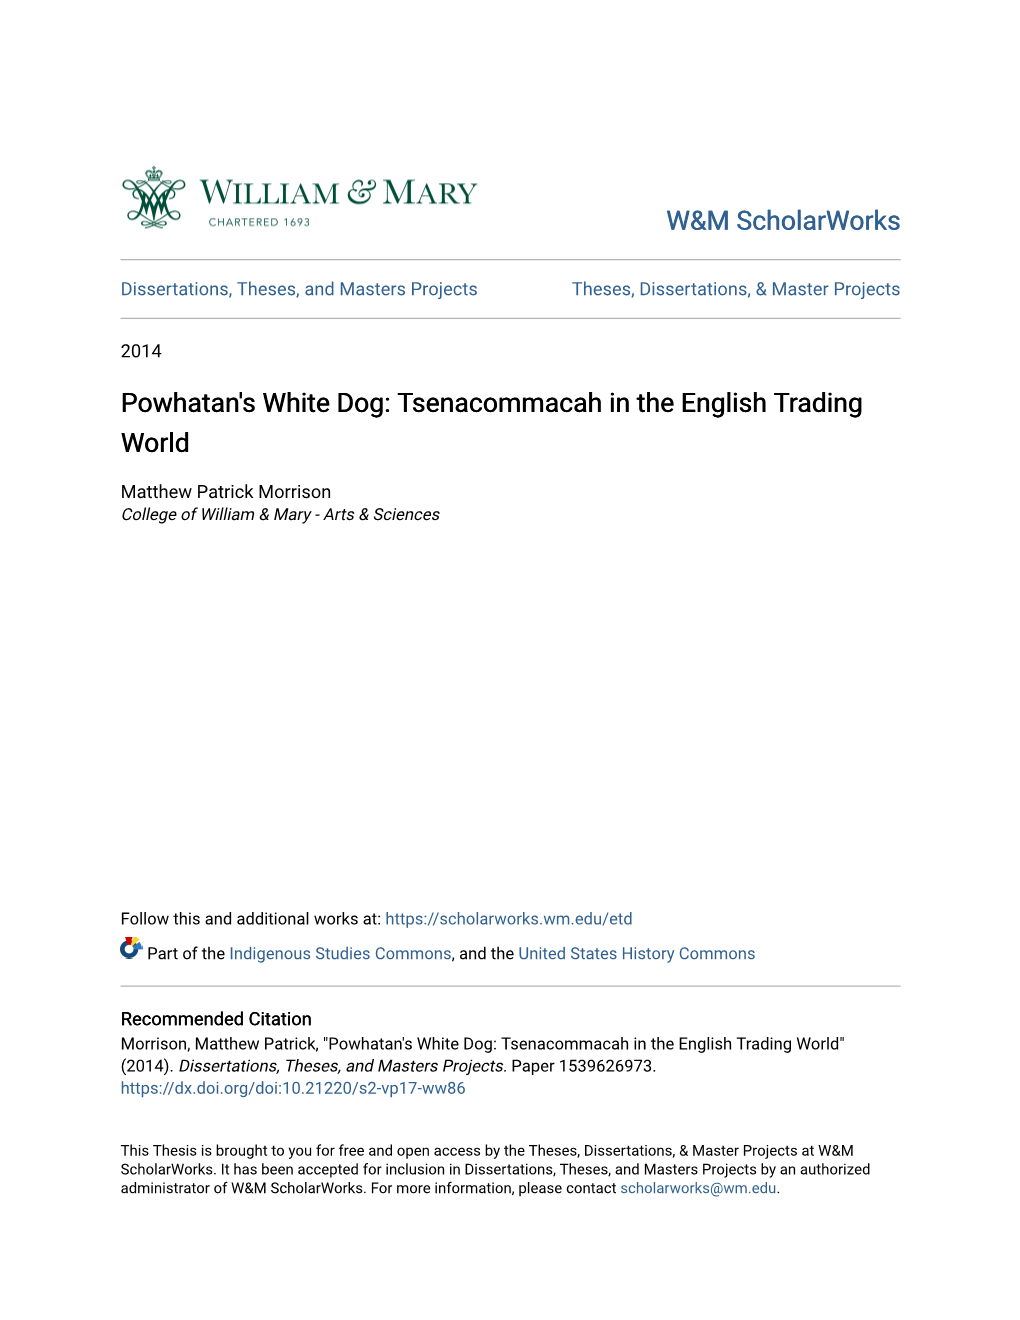 Powhatan's White Dog: Tsenacommacah in the English Trading World